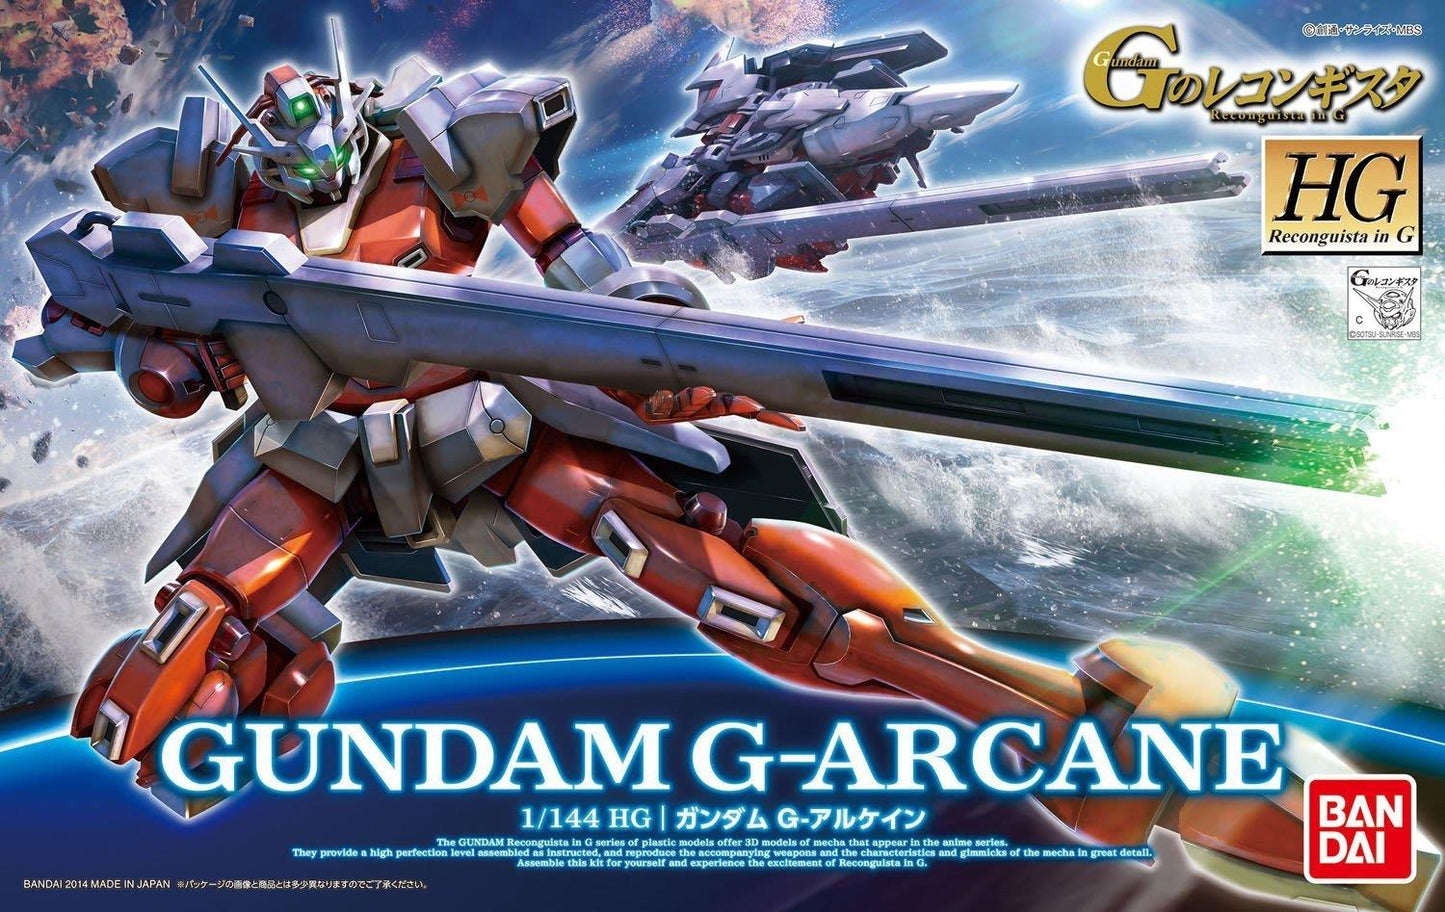 Gundam: Gundam G-Arcane HG (Reconguista in G) Model